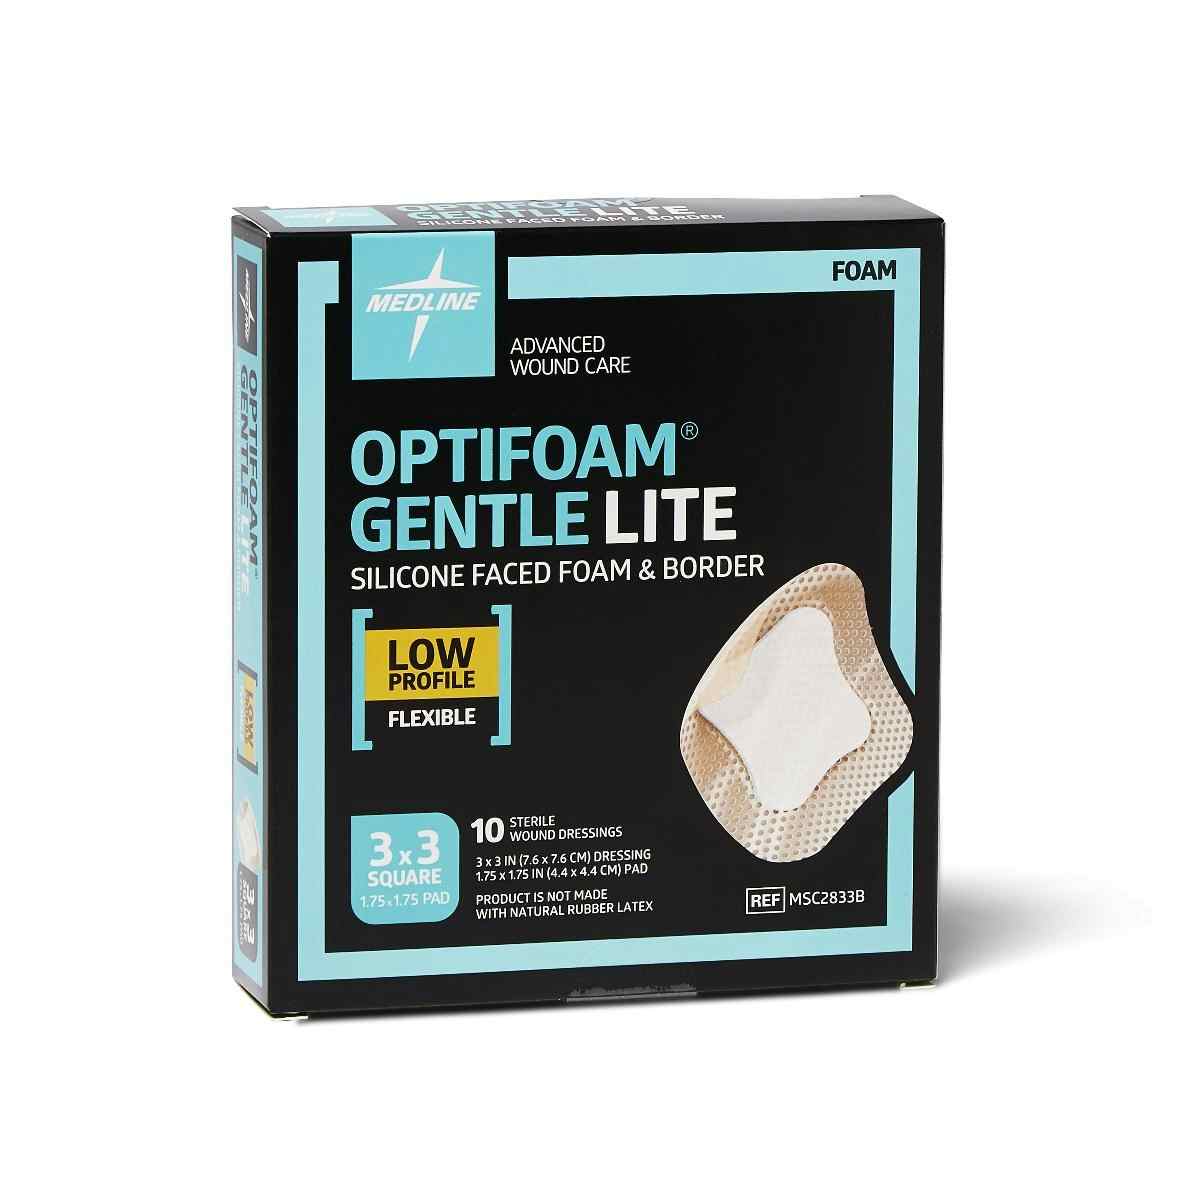 Medline Optifoam Gentle Lite Foam Dressing with Border, MSC2833BZ, 3" X 3" - Box of 10 